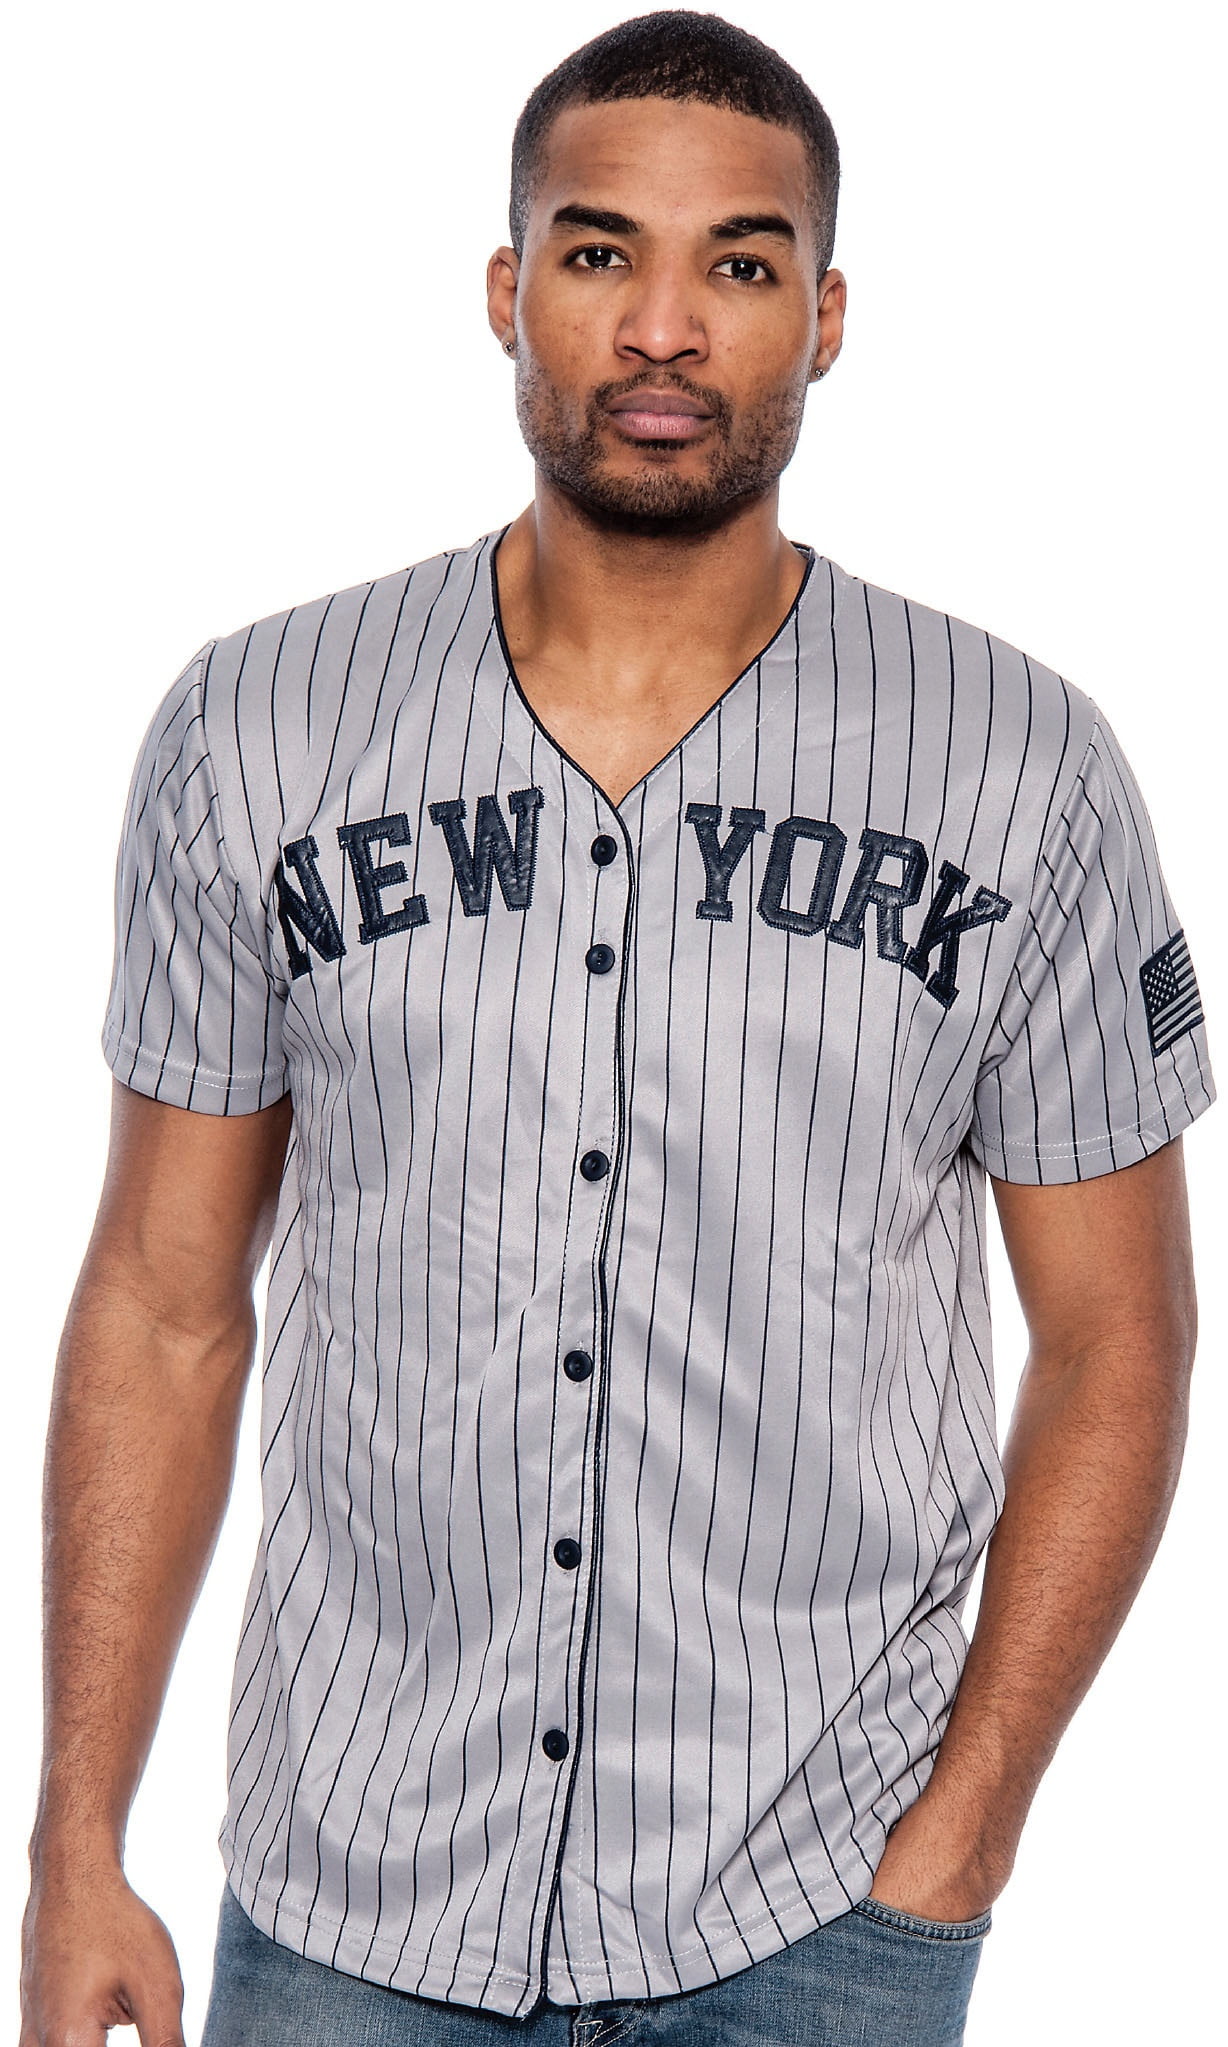 True Rock Men's New York Slim Fit Pinstripe Baseball Jersey (Navy/White, Small)